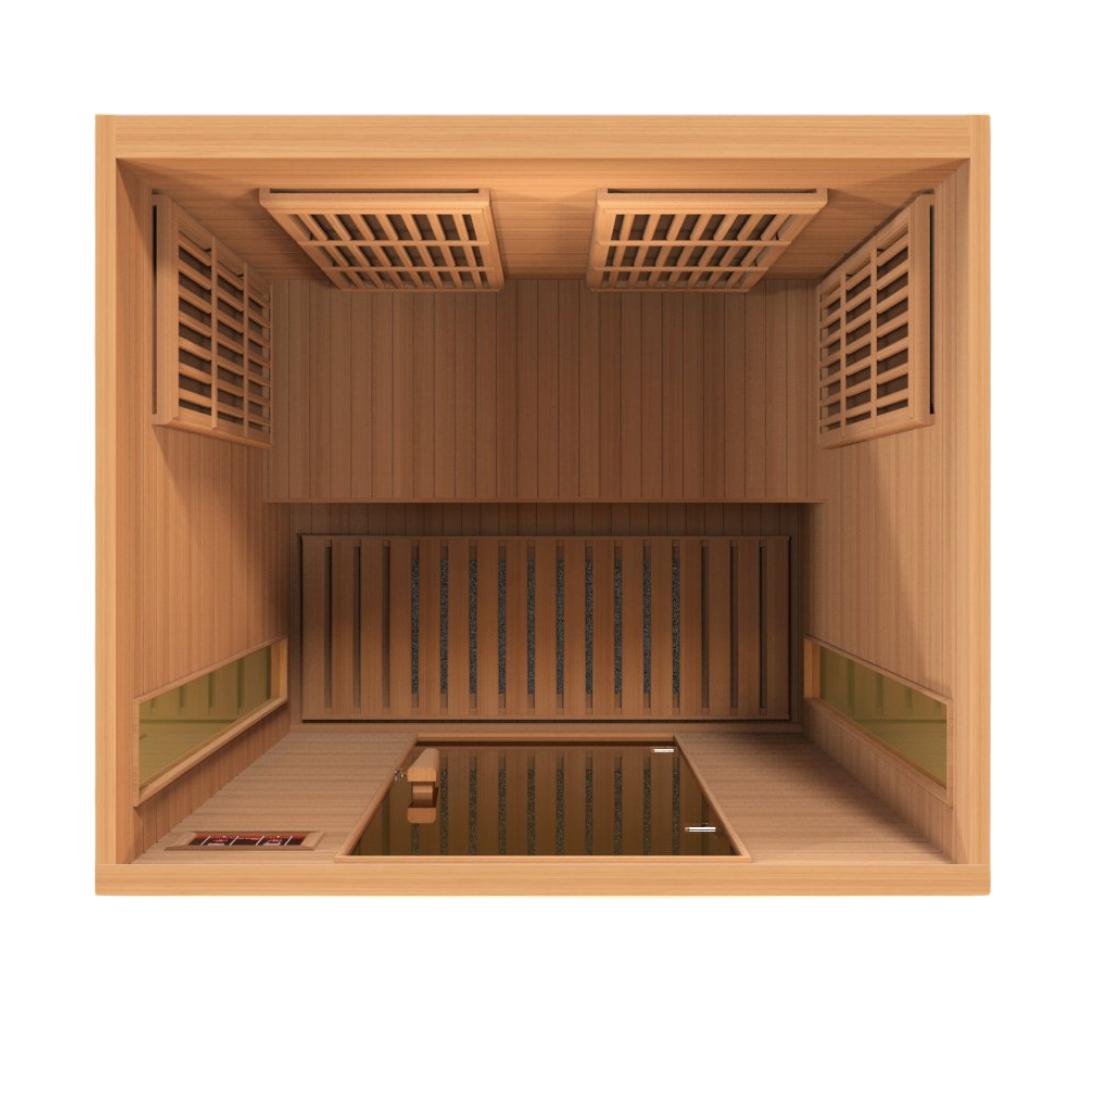 Maxxus 2 Person Low EMF Infrared Sauna in Canadian Red Cedar, MX-K206-01 CED Interior Layout